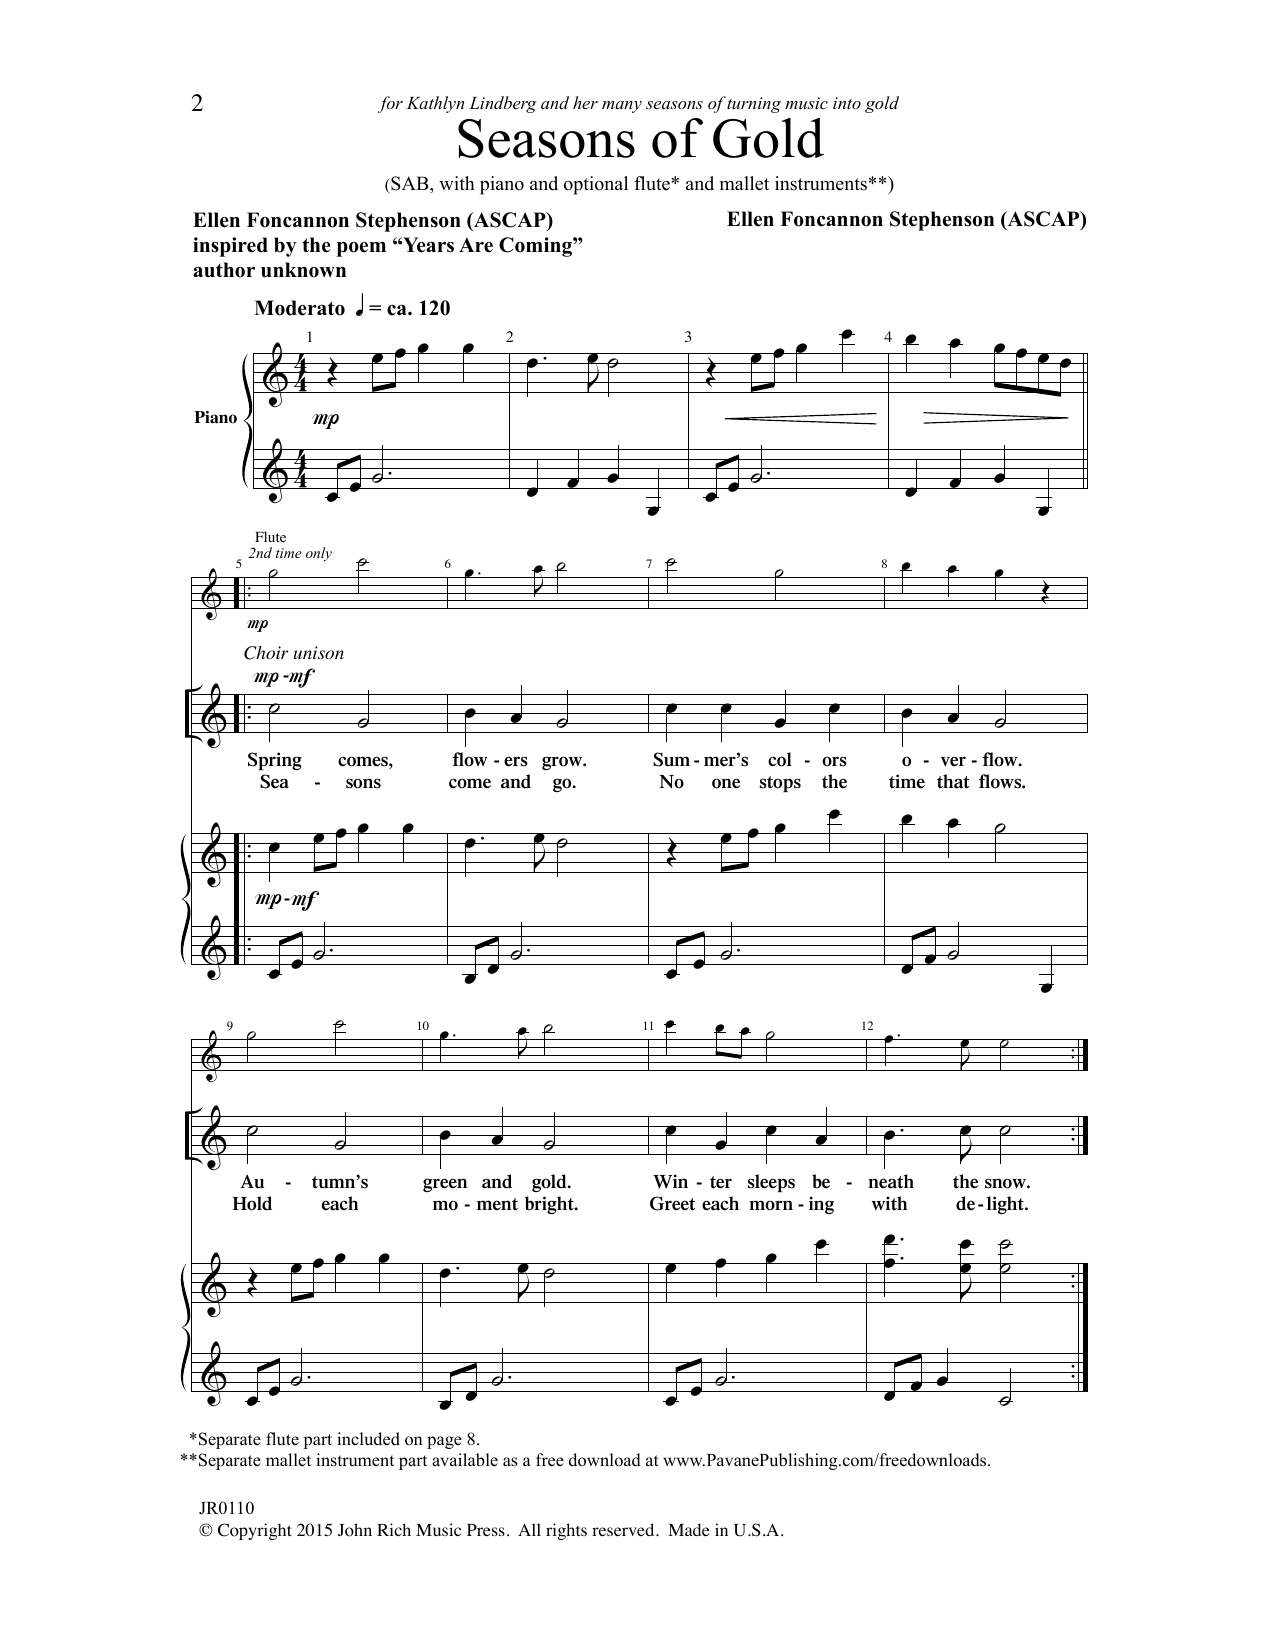 Ellen Foncannon Stephenson Seasons of Gold Sheet Music Notes & Chords for Choral - Download or Print PDF